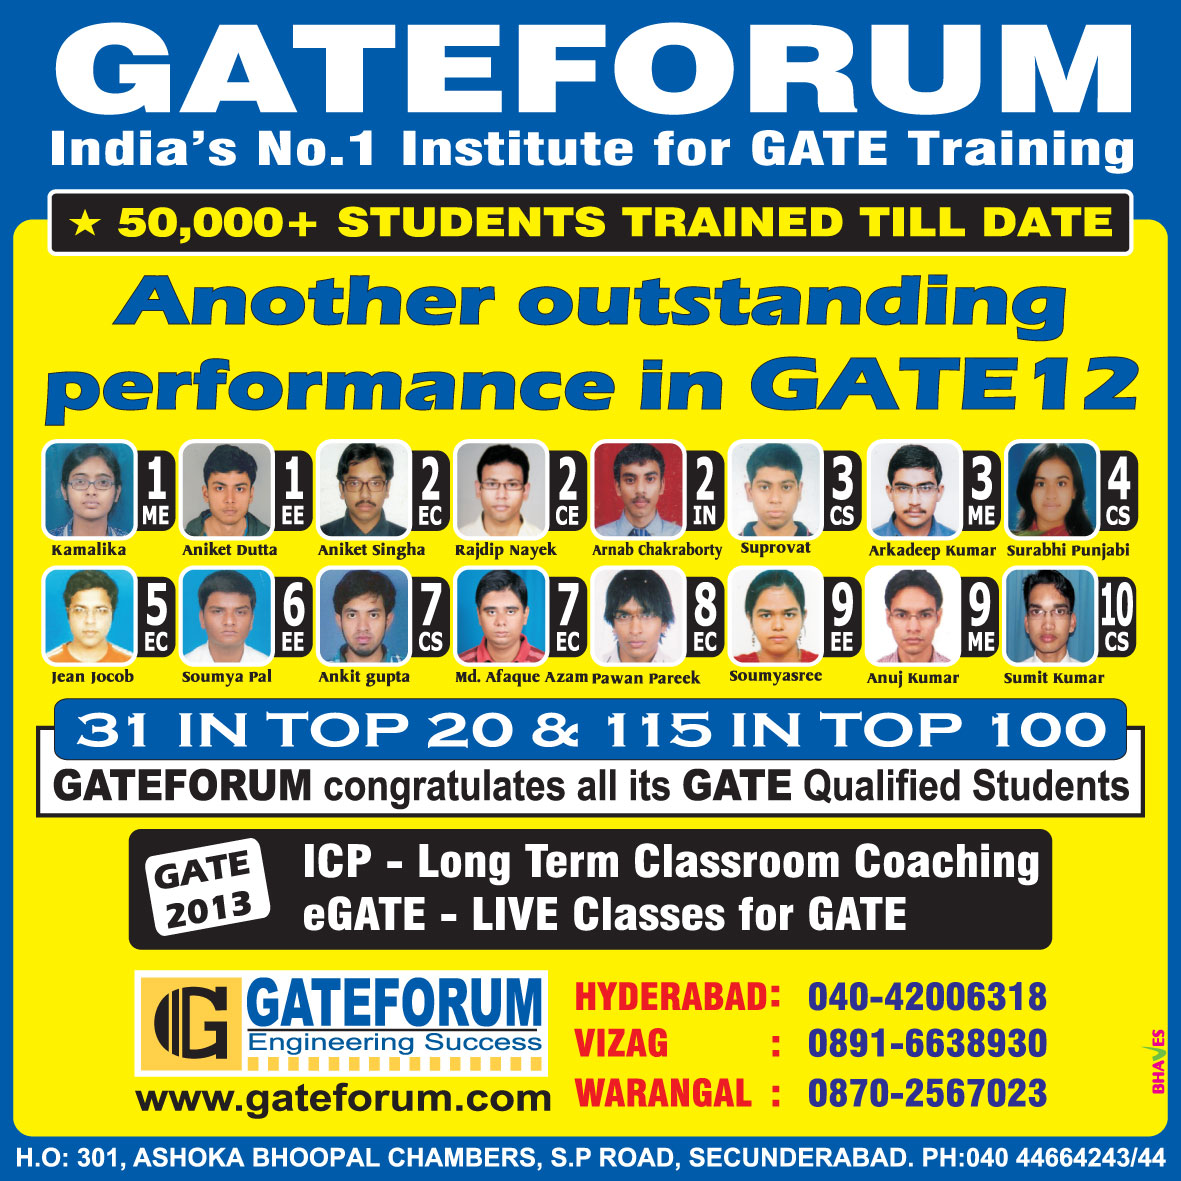 Gateforum Gate 2012 Result Ad in Eenadu Newspaper